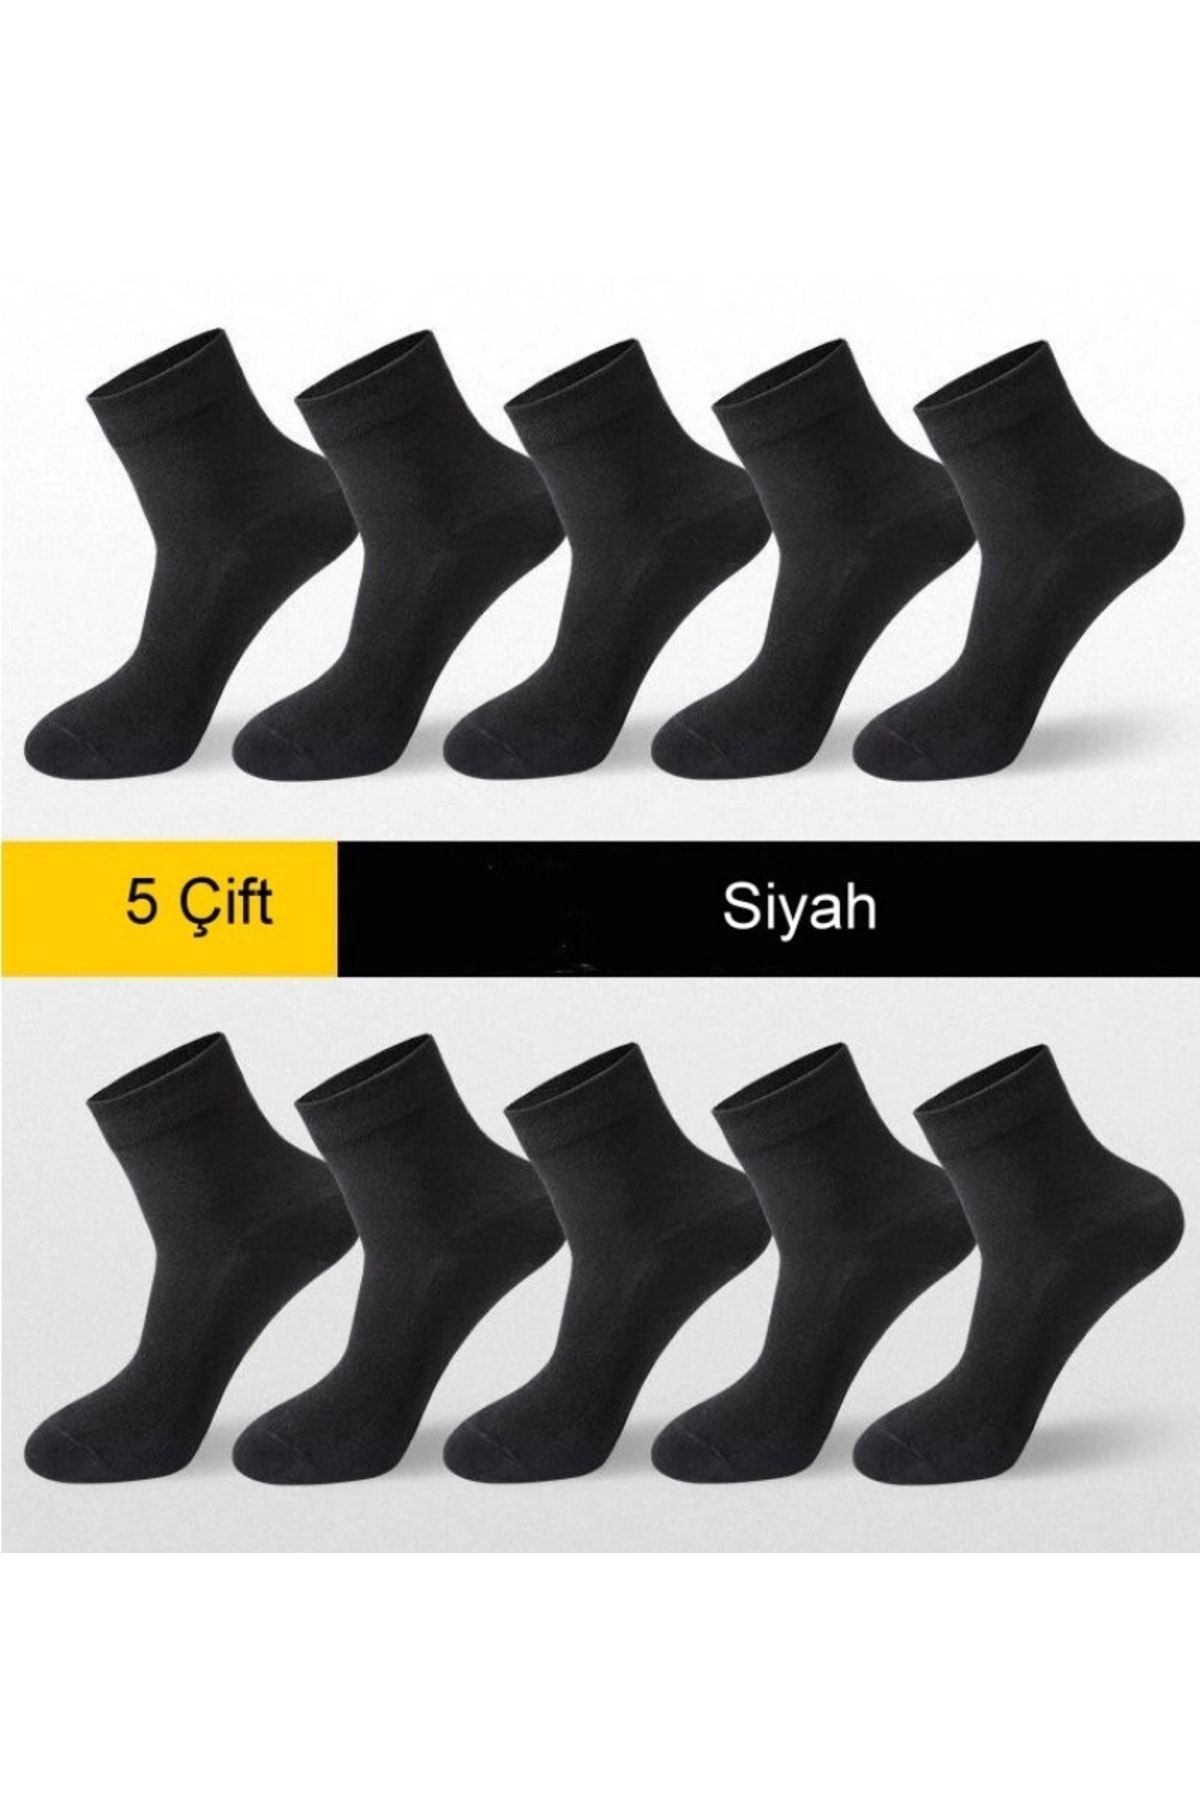 çorapmanya 5 Çift Bambu Siyah Yarım Konç Erkek Çorap